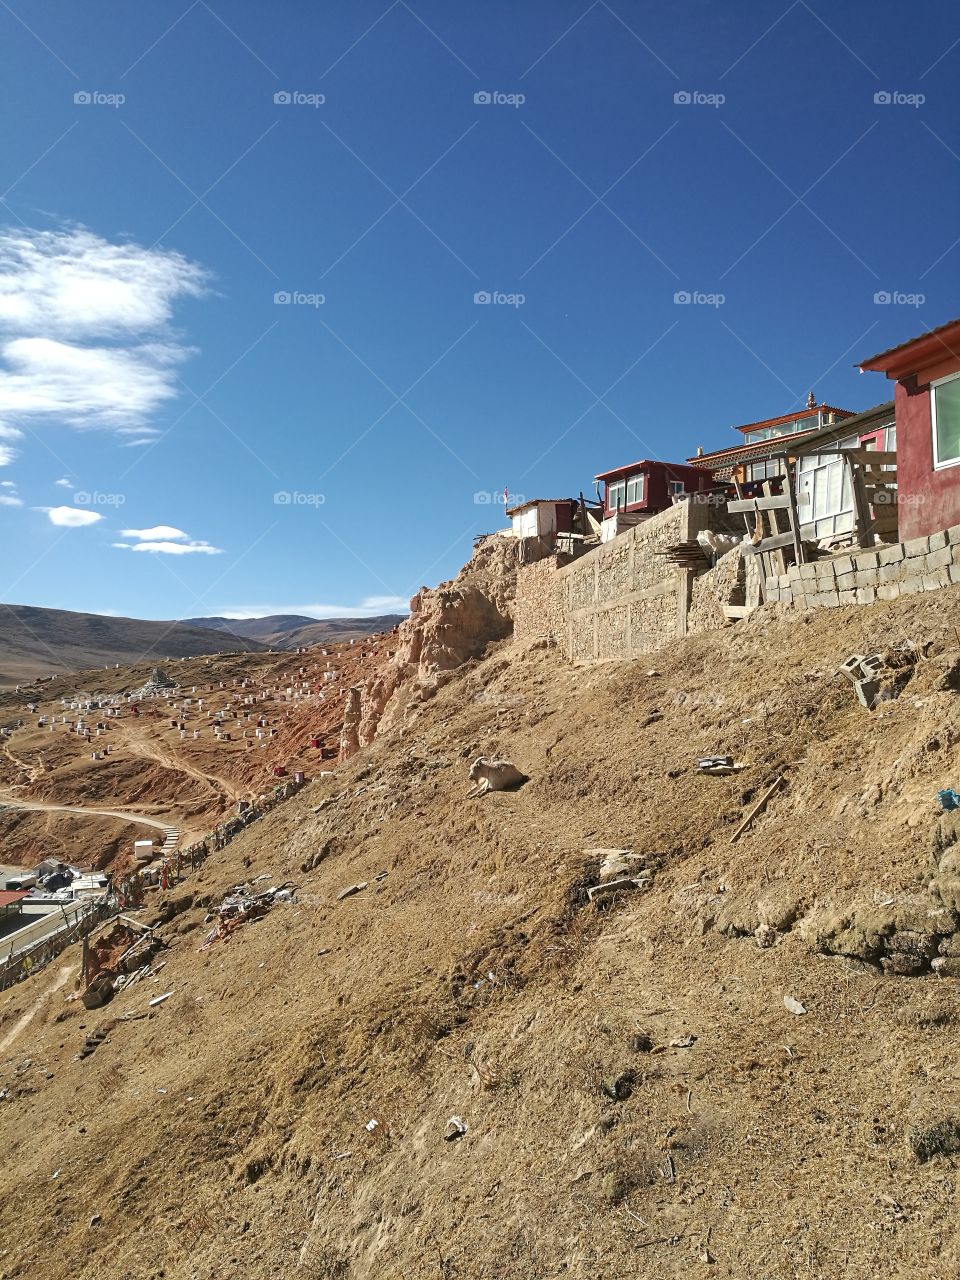 Yaqing Tibetan Buddhist Monastery for Nuns

Buddhism School and Monastery in Ganzi, Sichuan Province, China